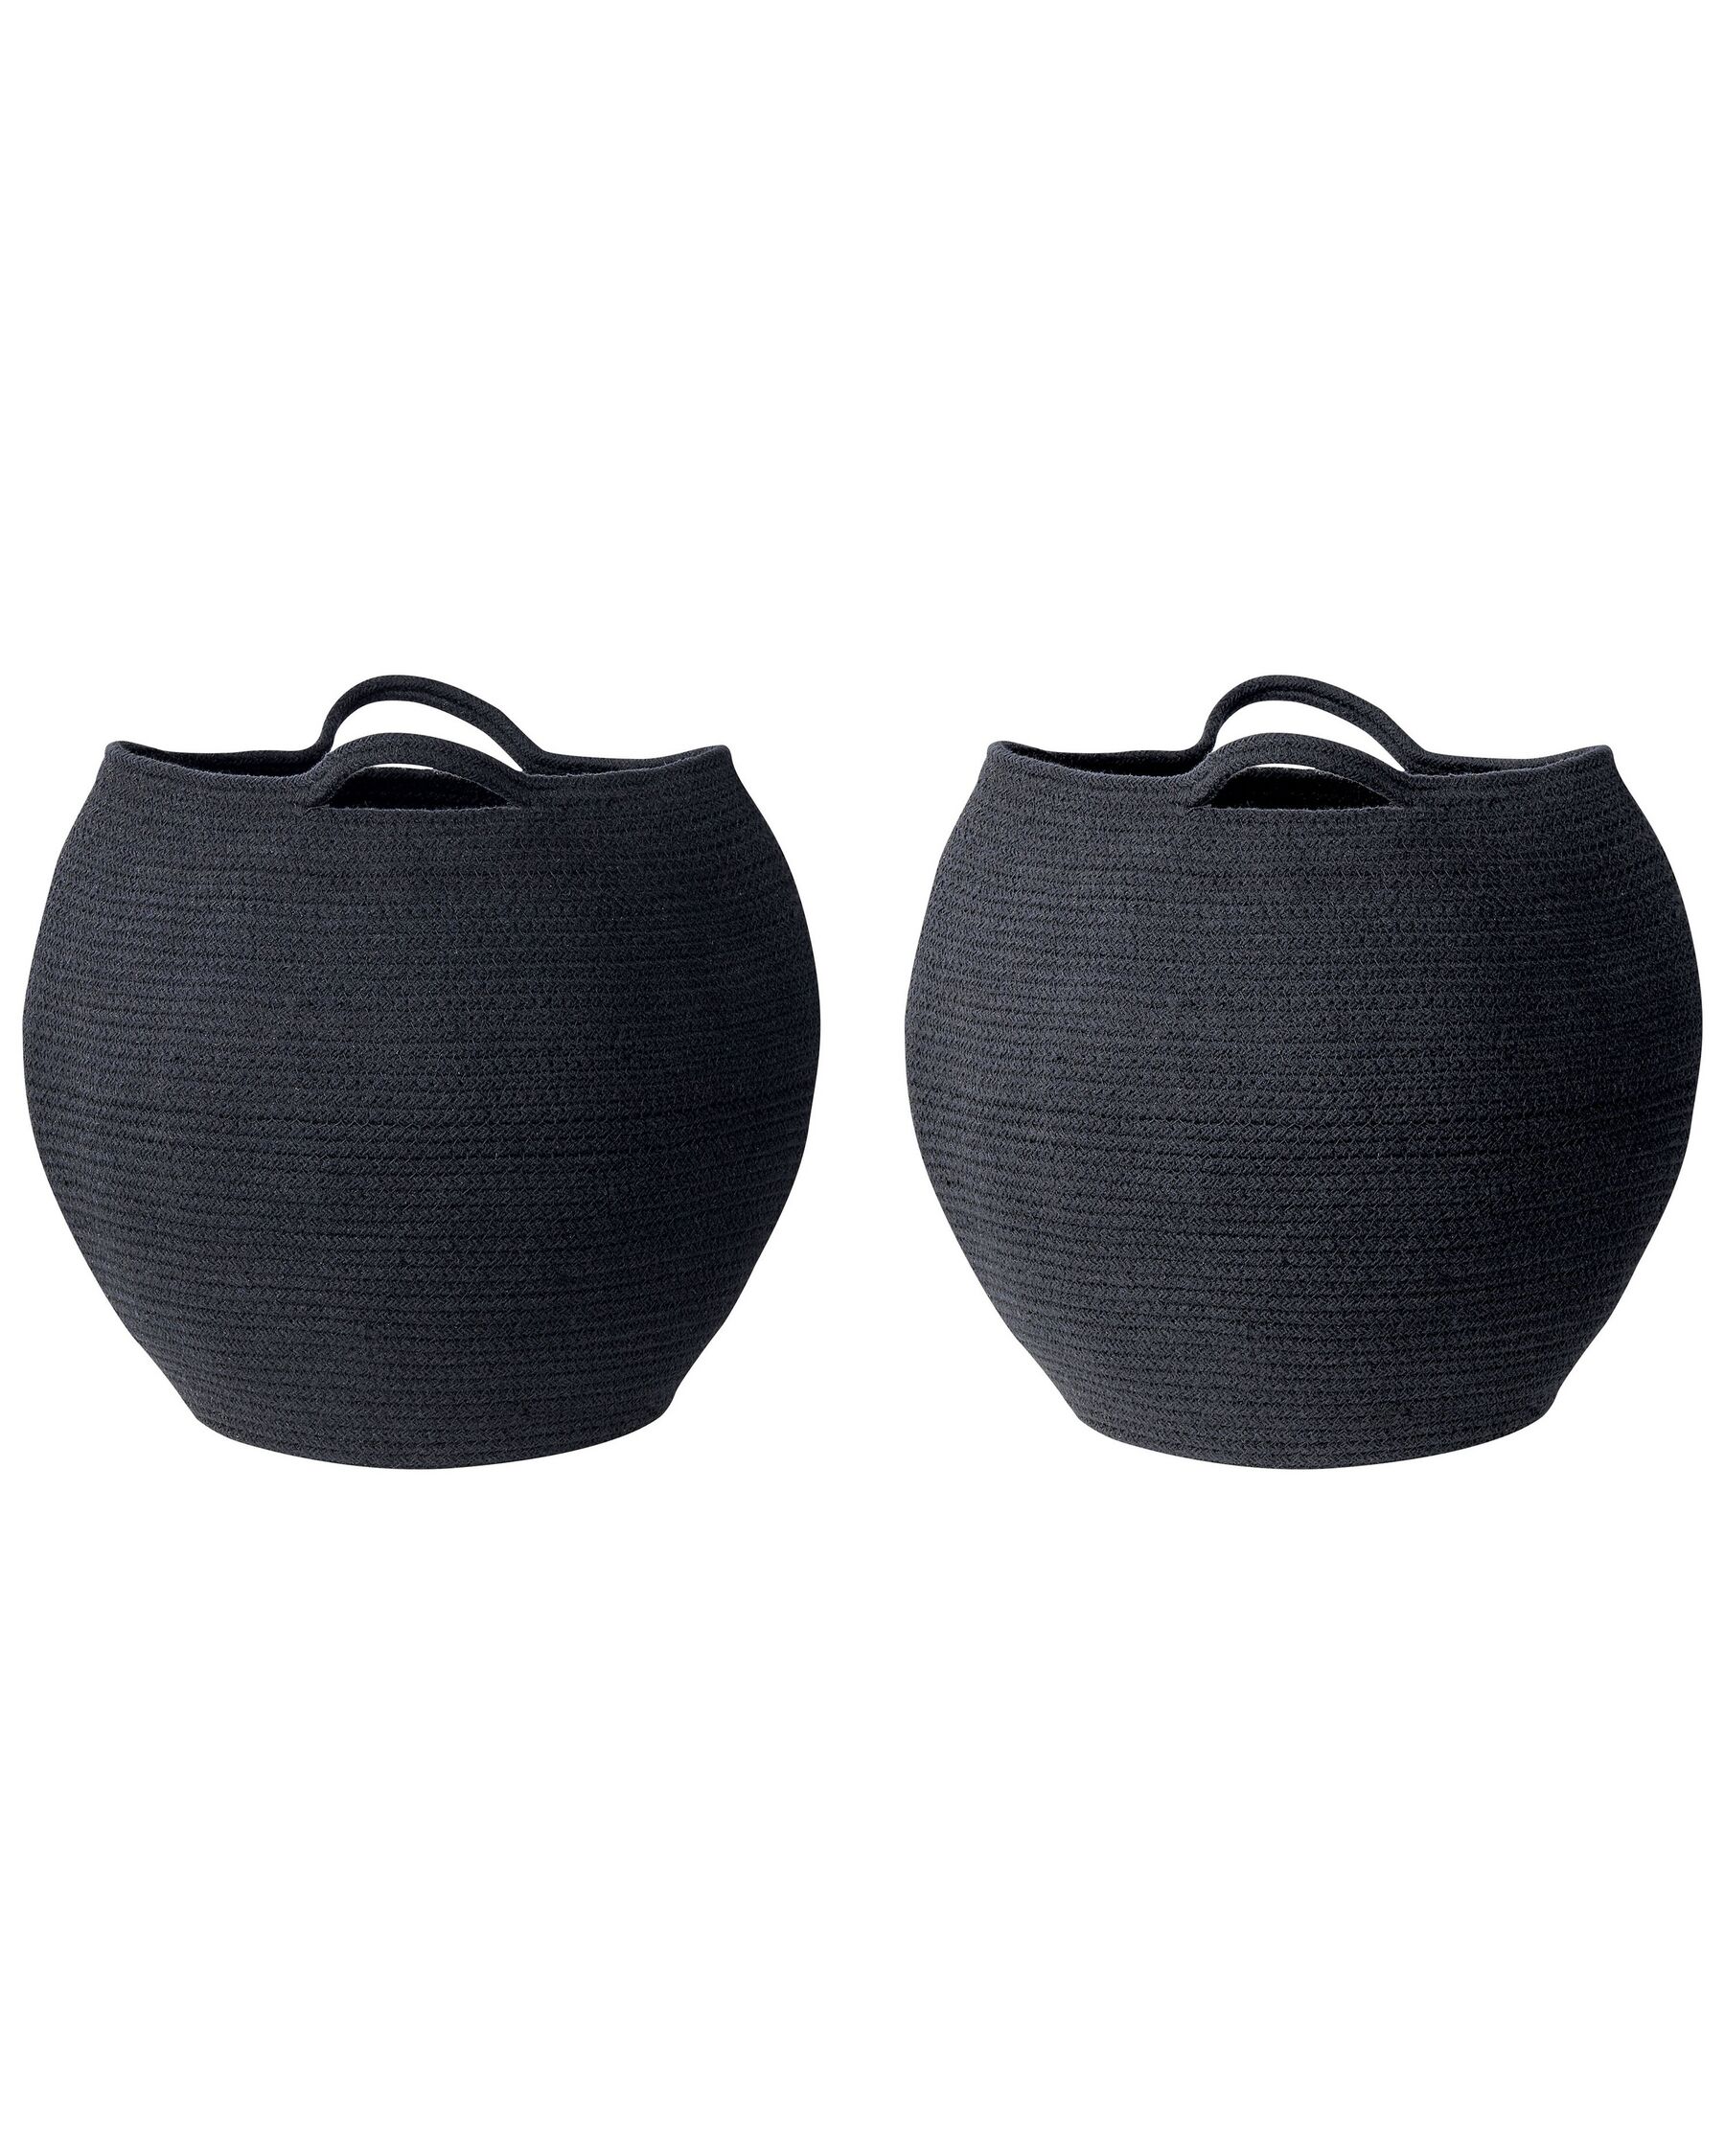 Conjunto de 2 cestas de algodón negro 30 cm PANJGUR_846416